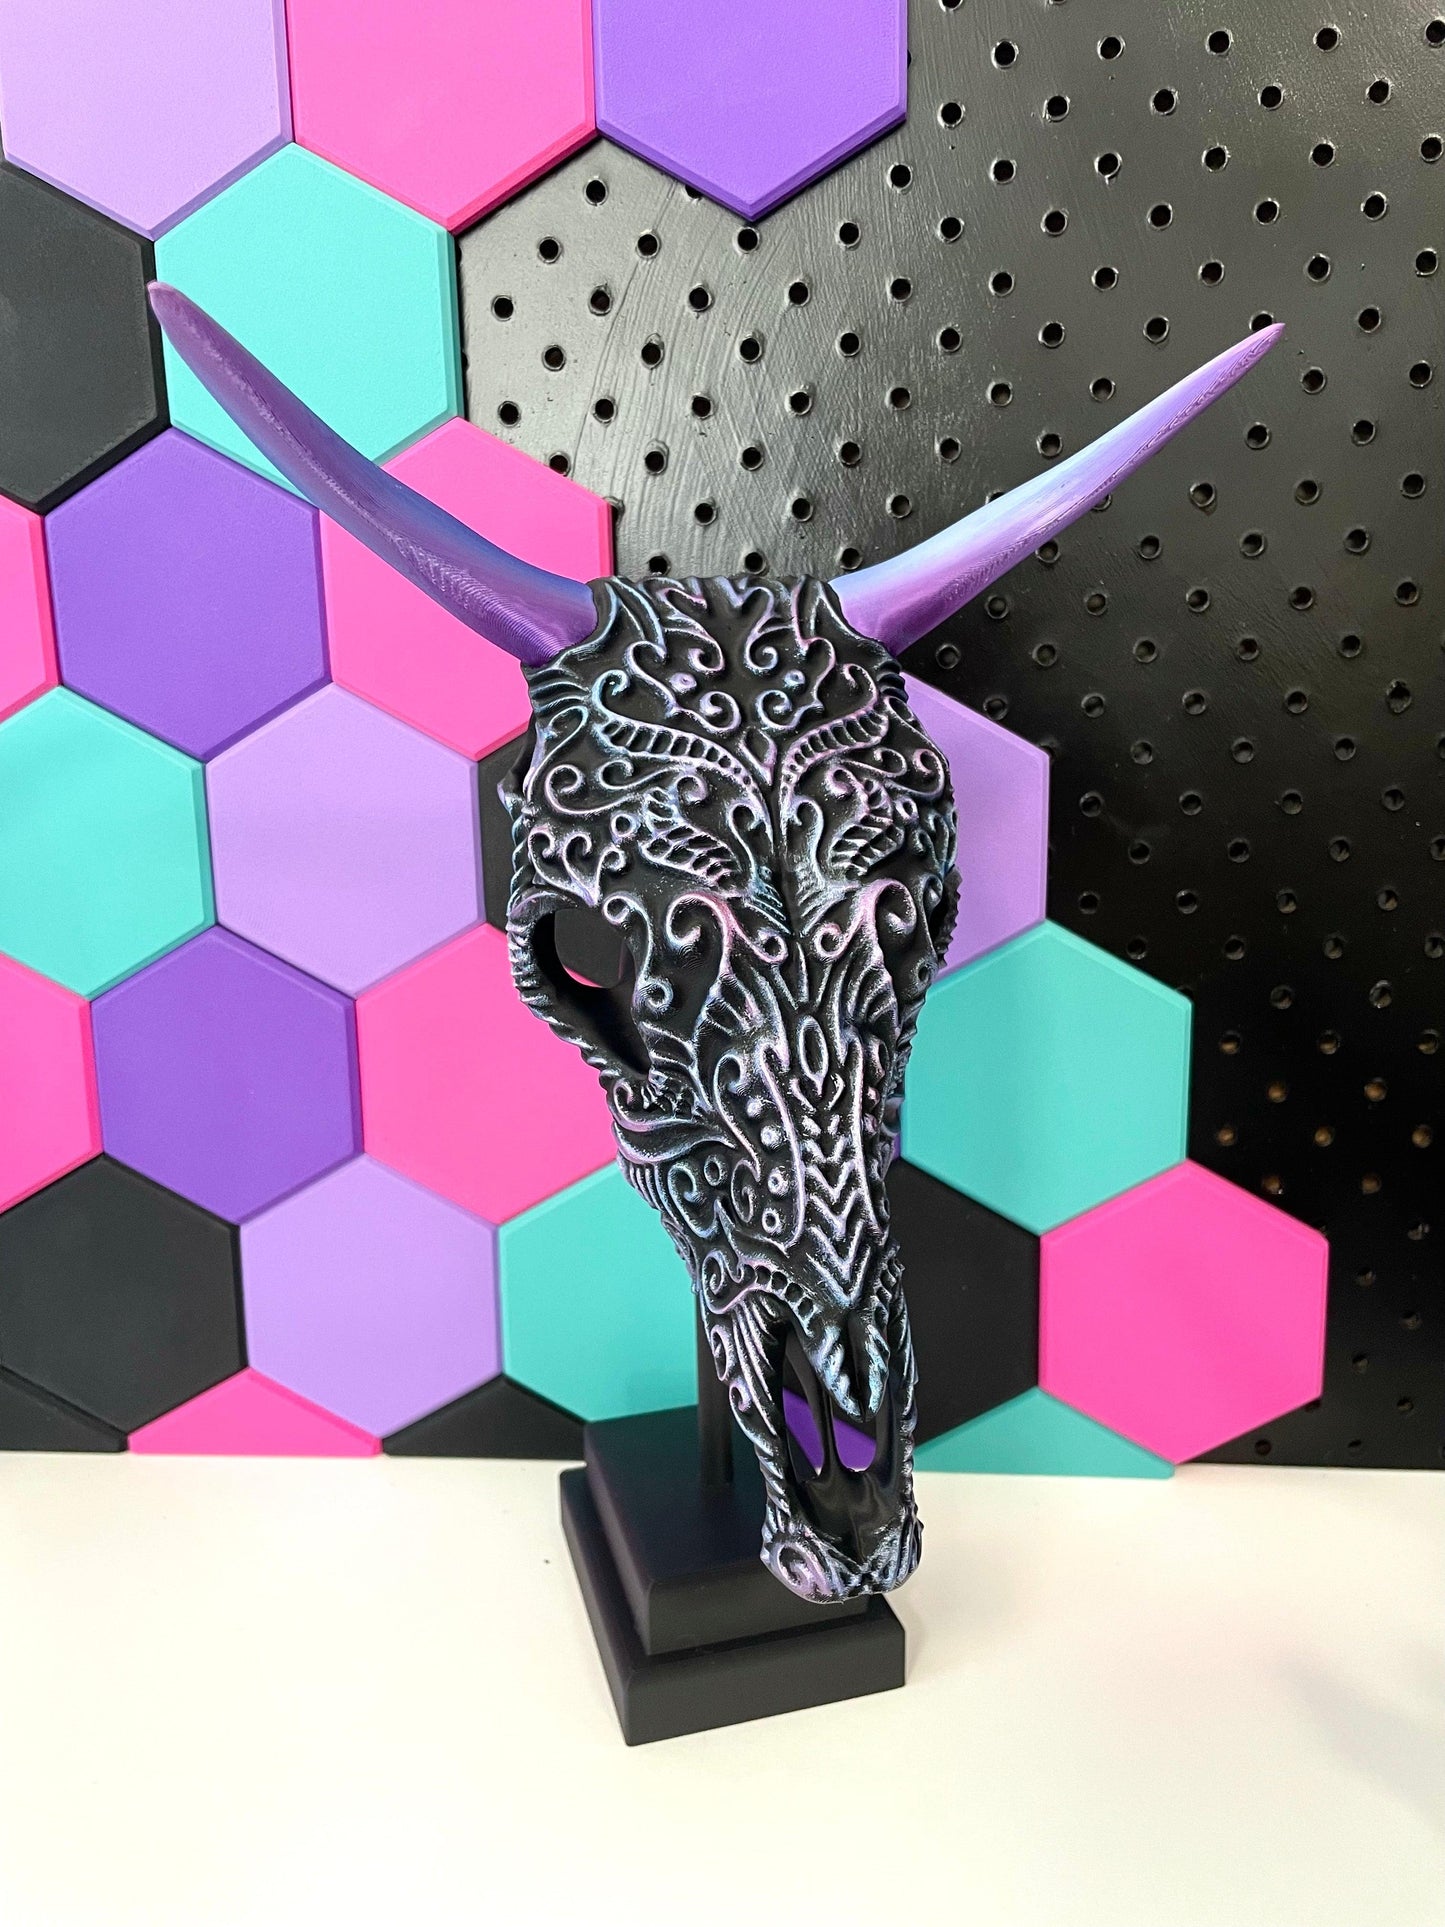 3D Printed Cow Skulls - Fantasy Forest 3D